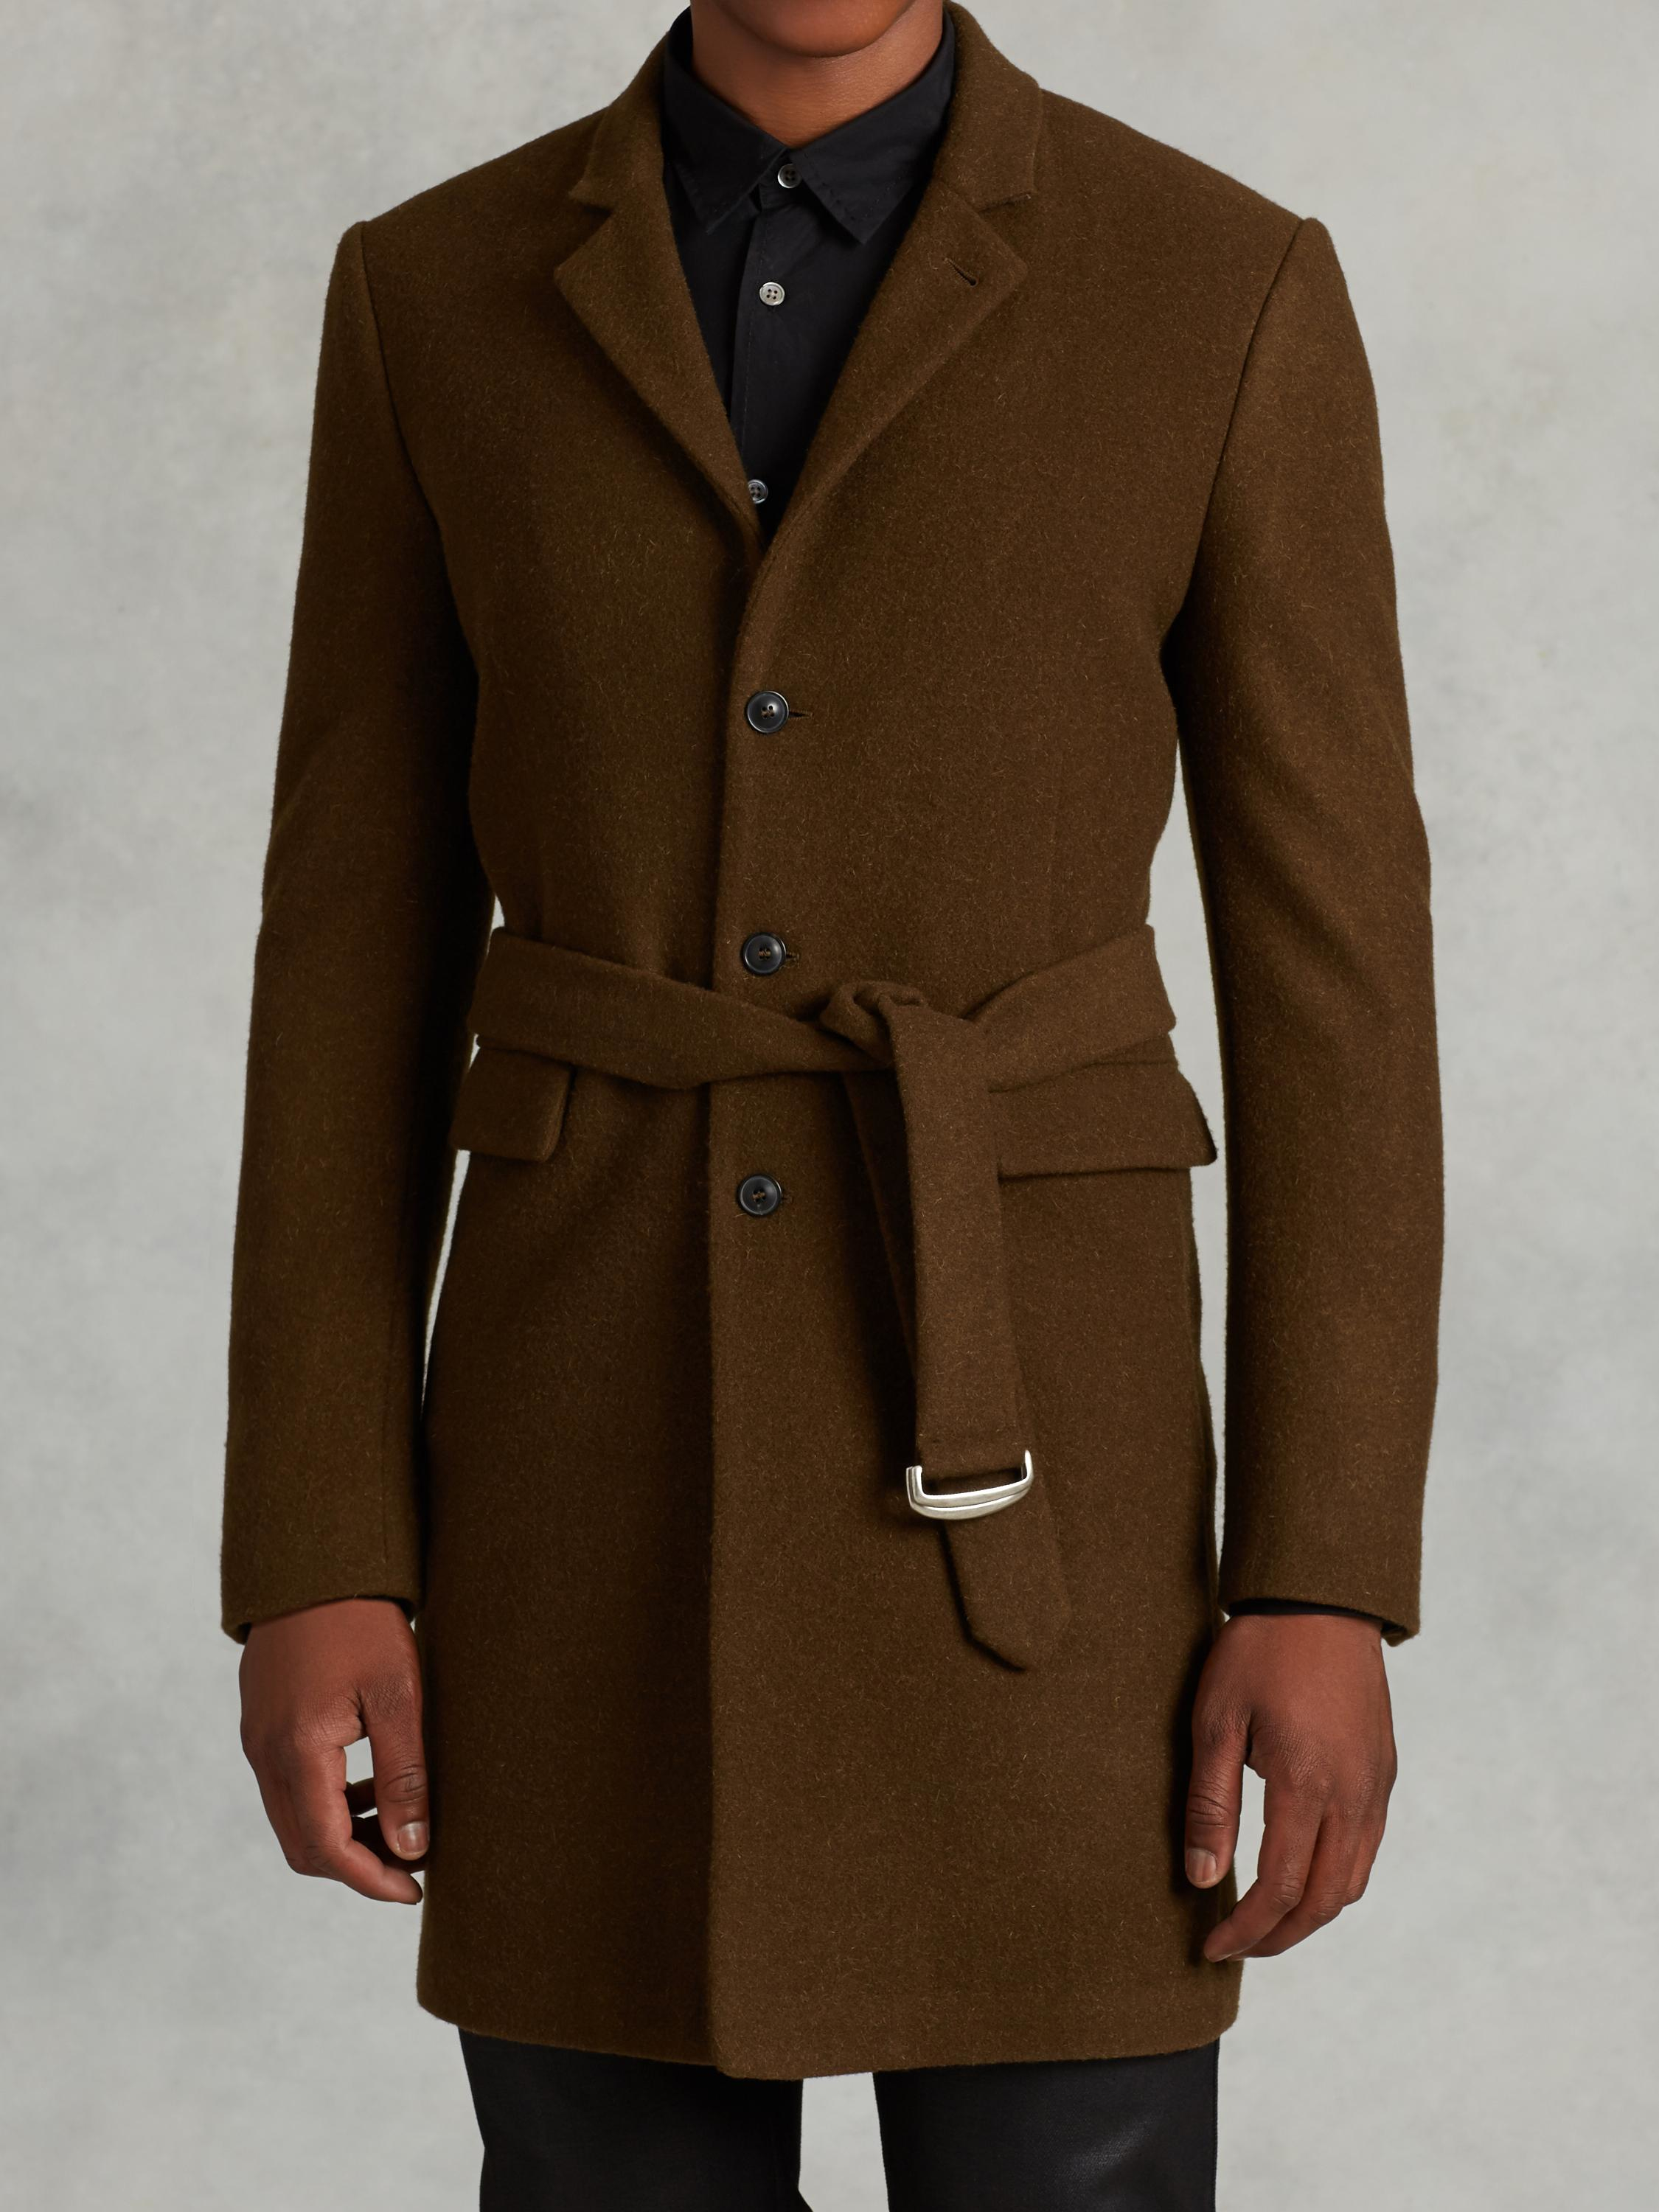 Lyst - John Varvatos Wool Belted Coat in Brown for Men